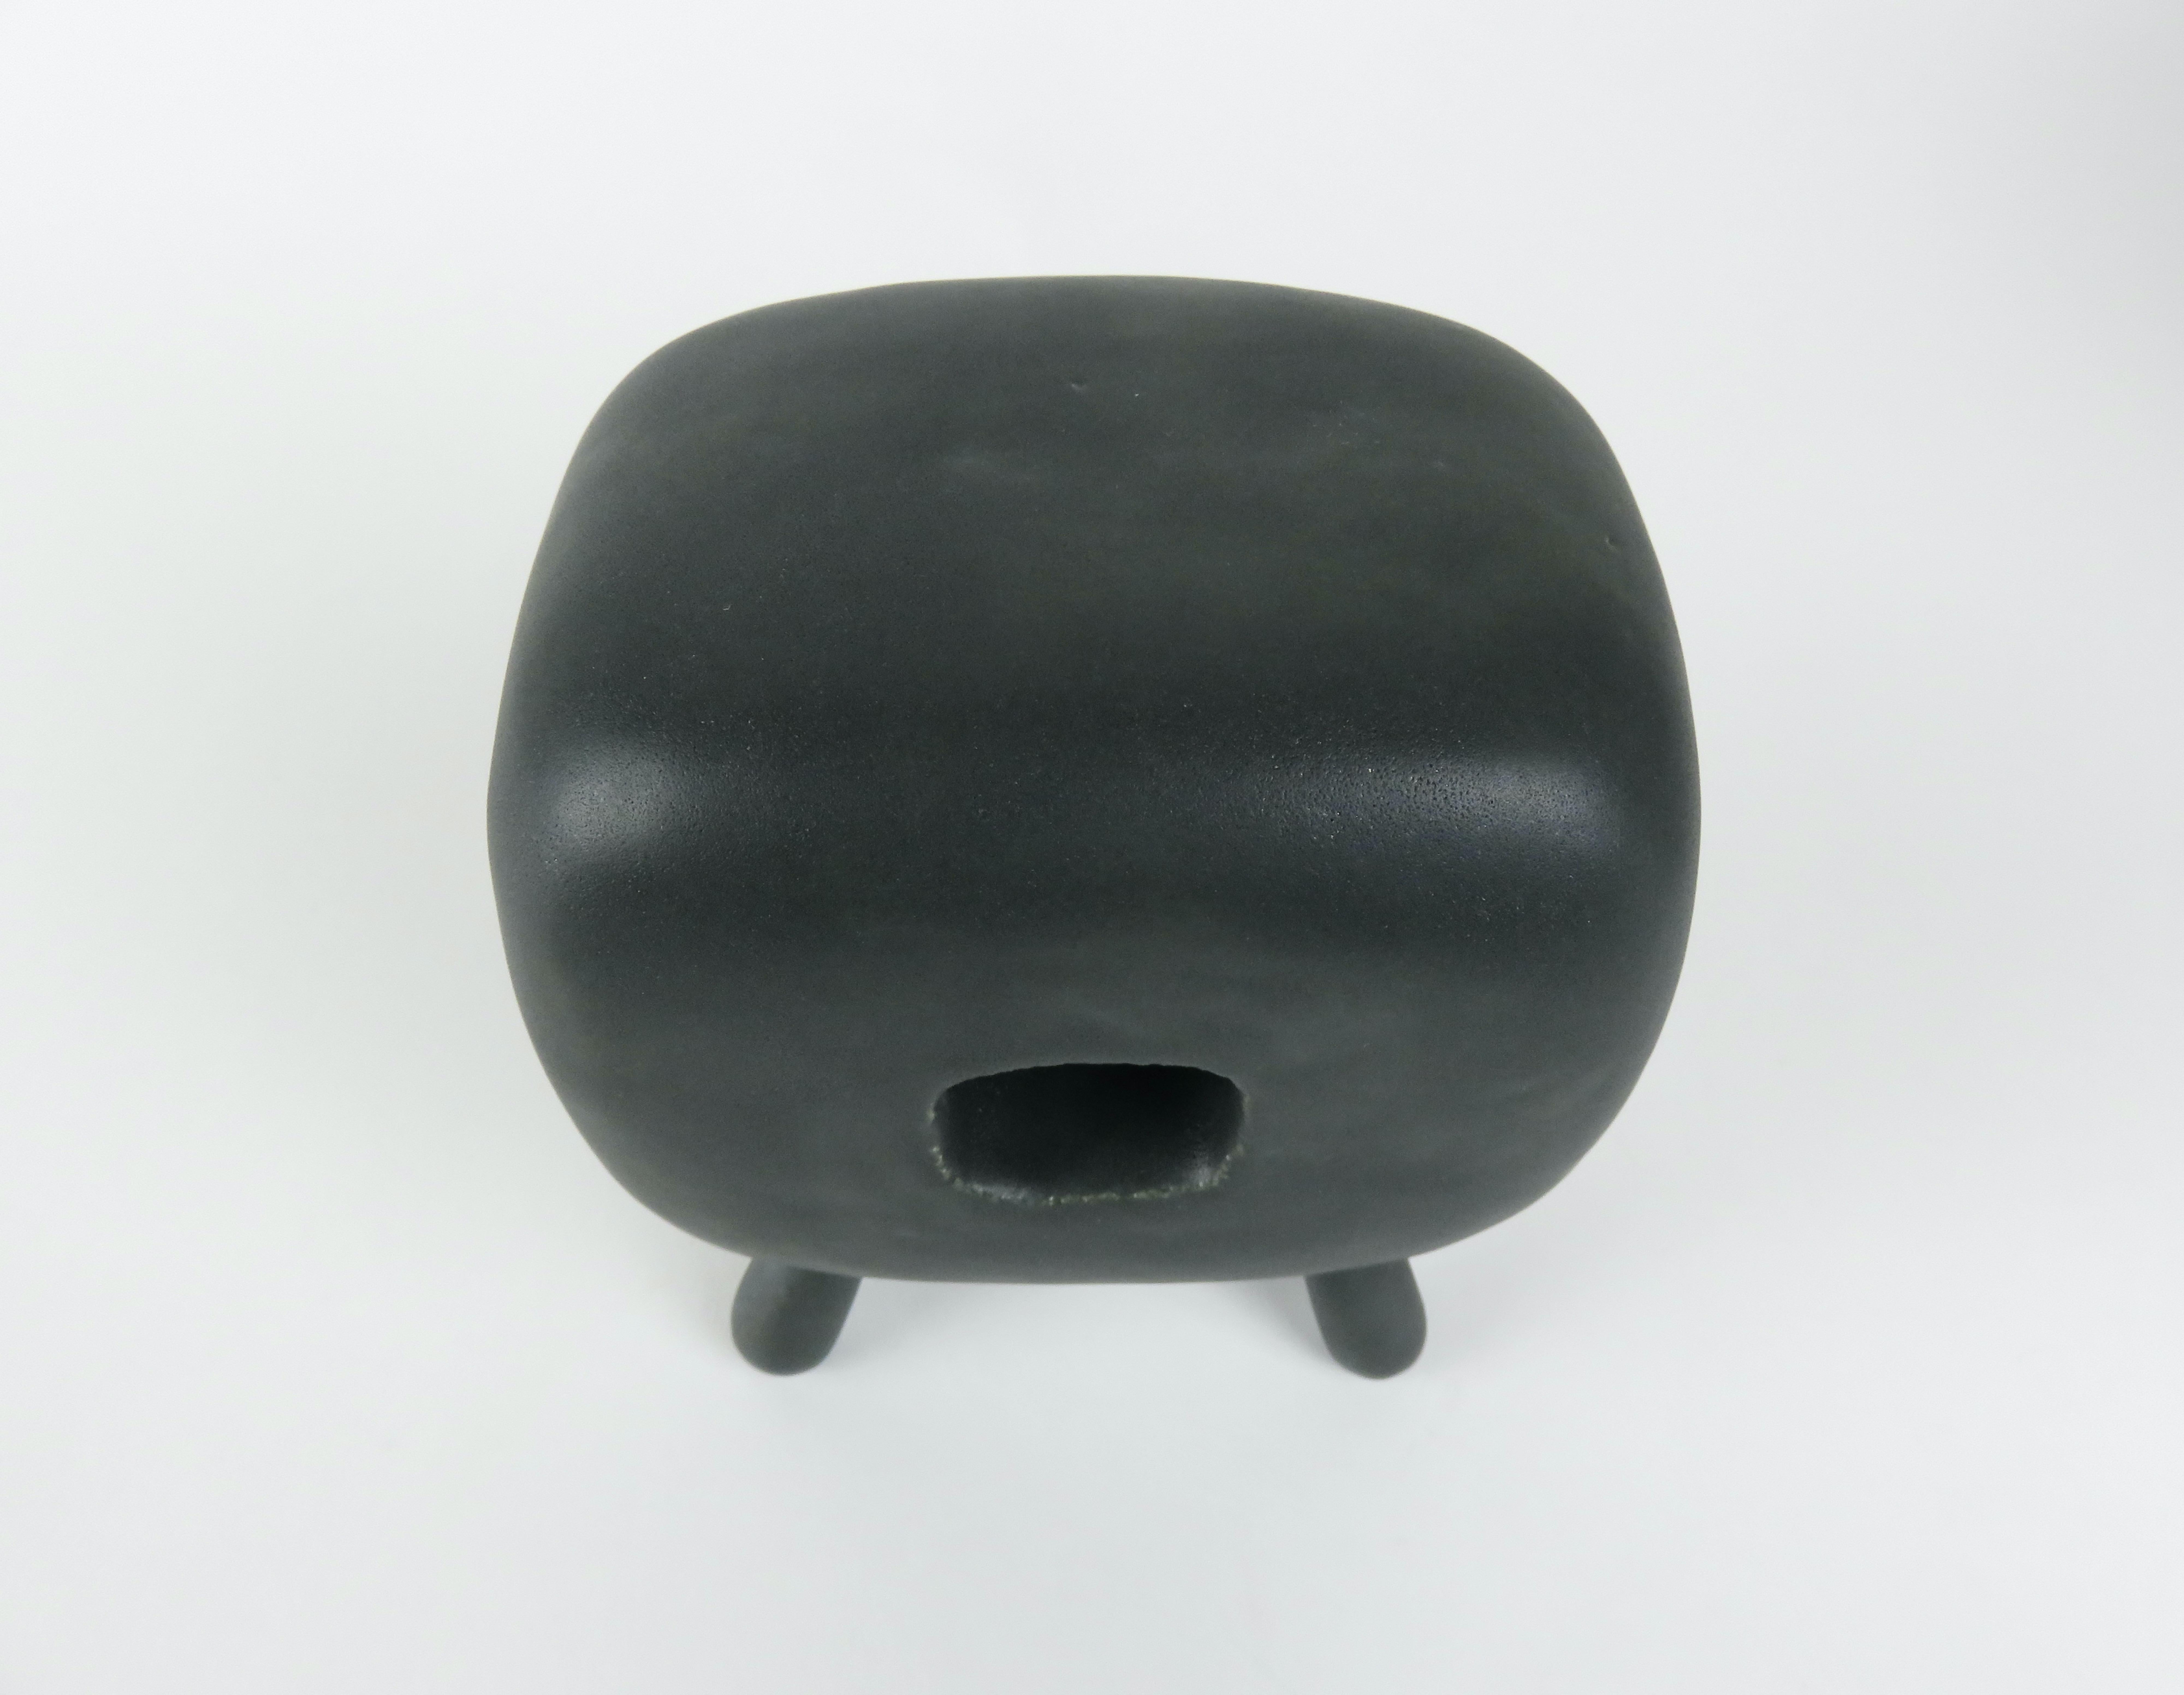 Smooth Black Glazed Ceramic Cube with Square Center Opening, 4 Legs, Handbuilt 1